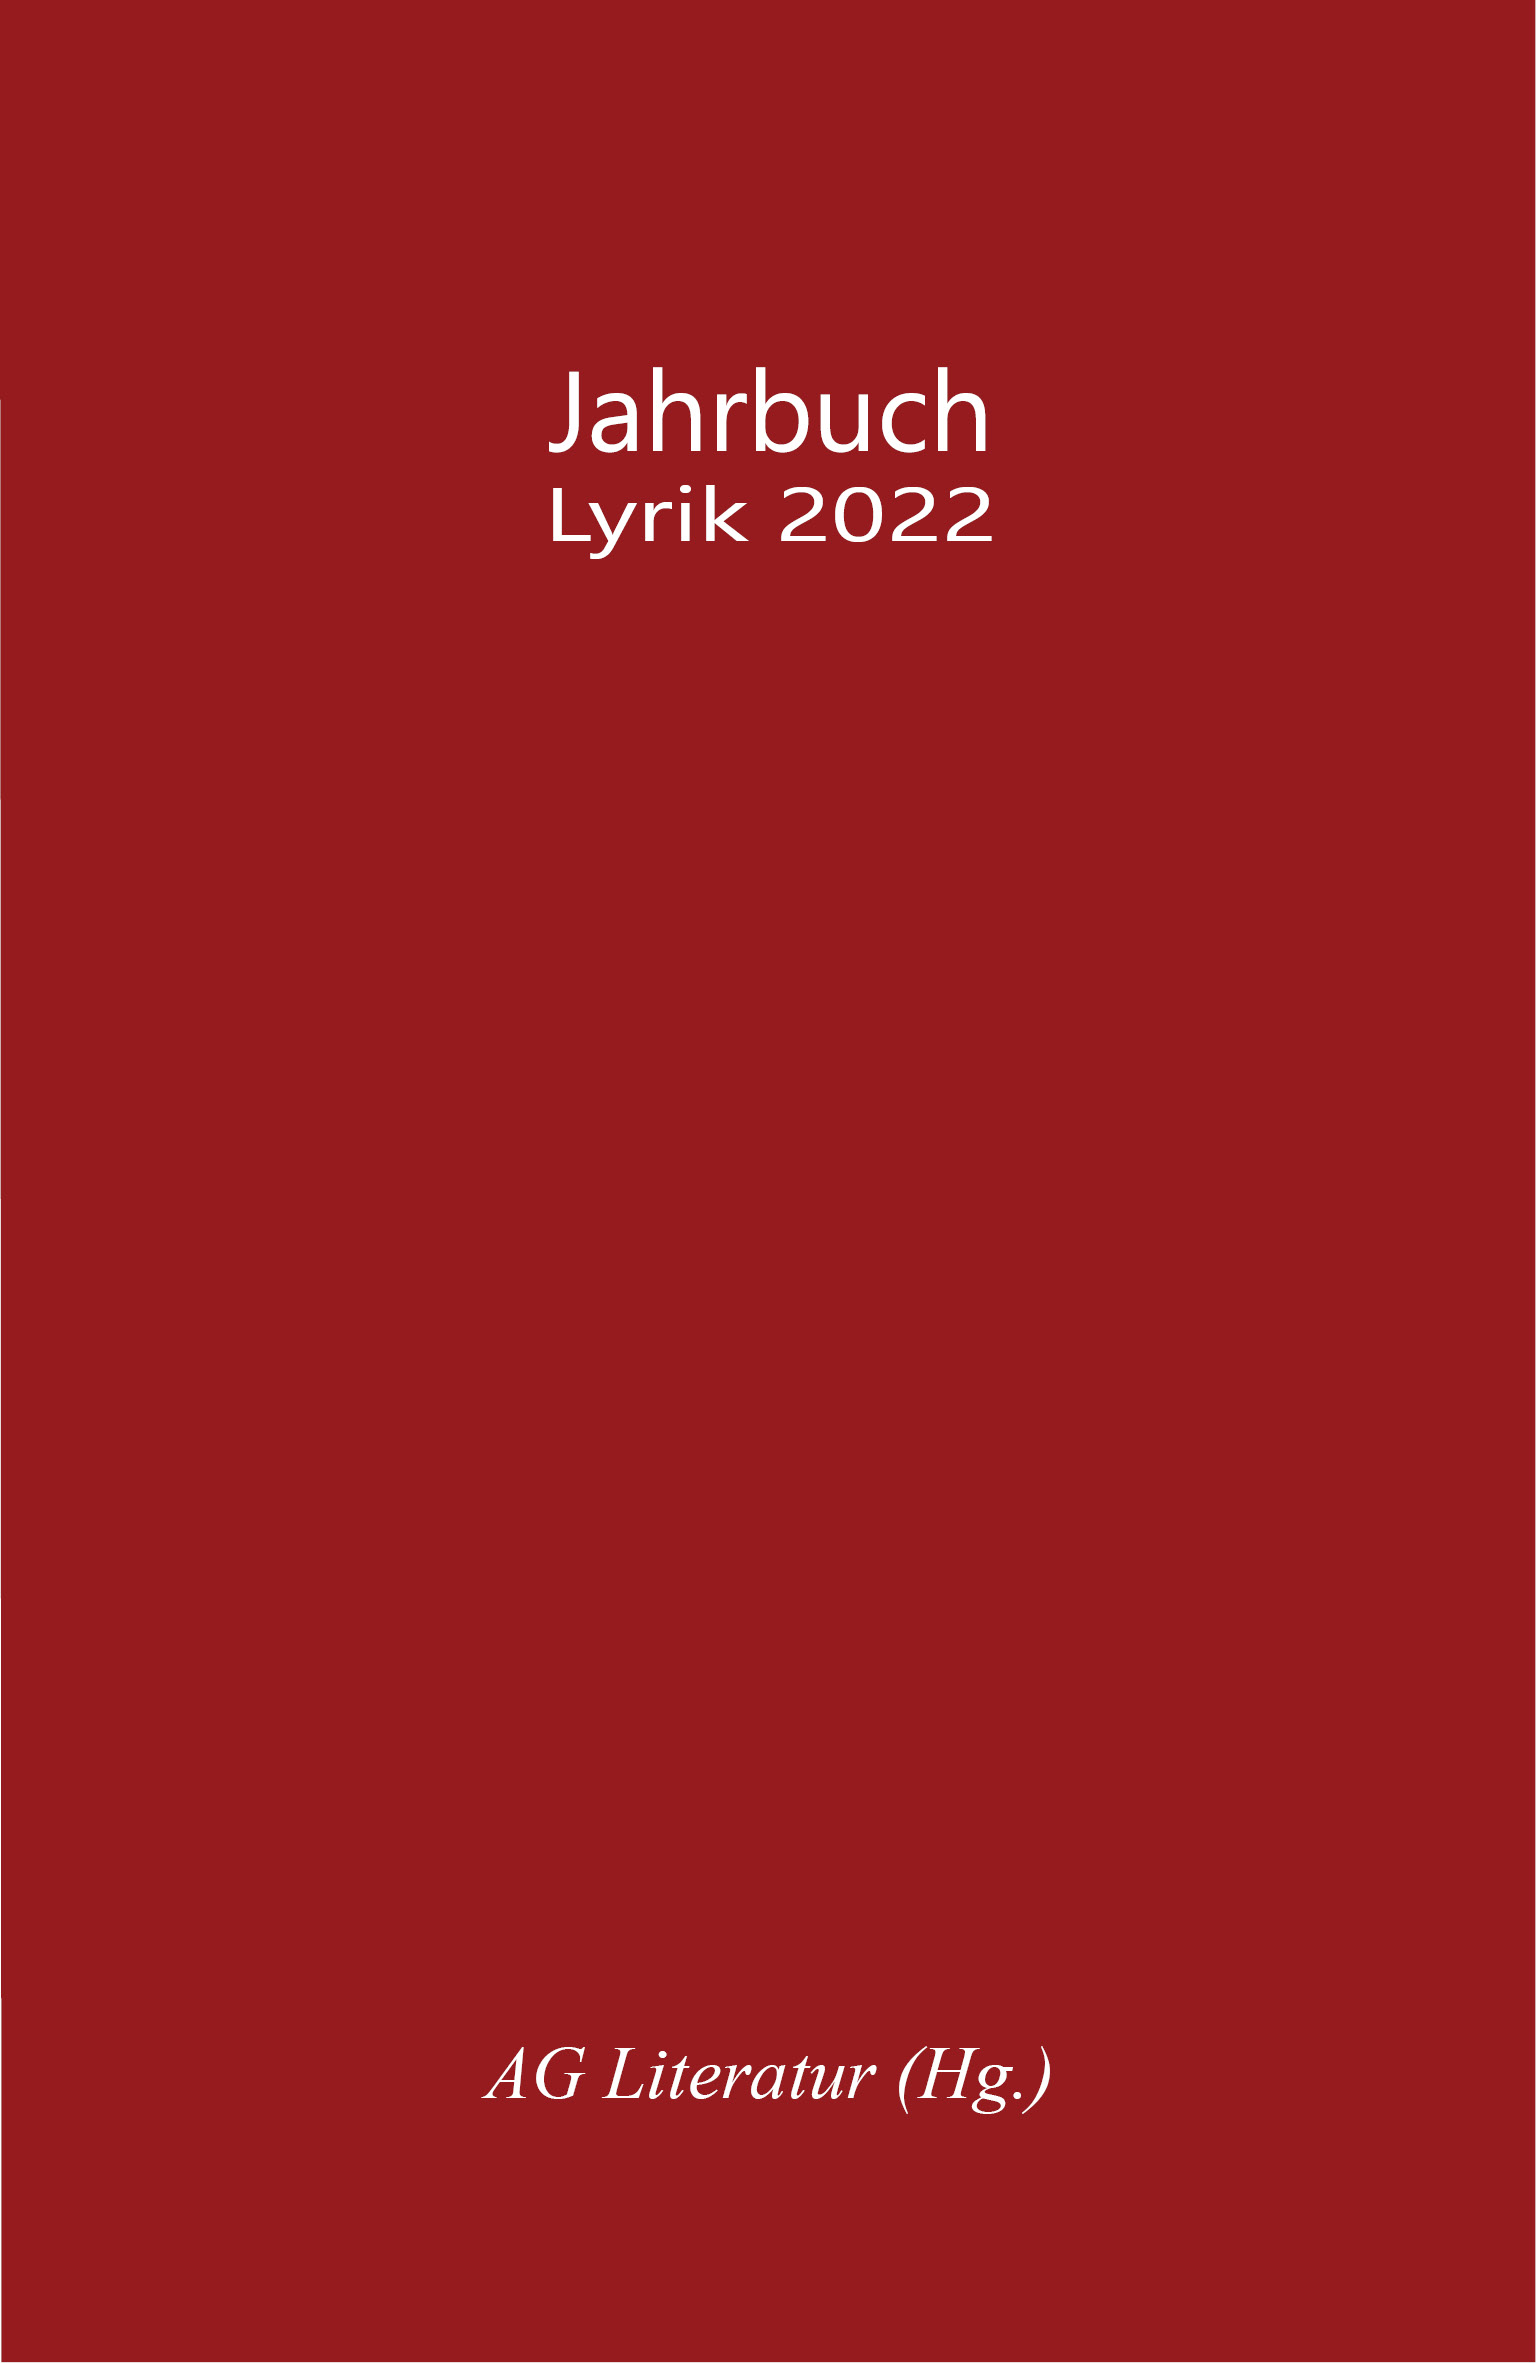 cover jahrbuch 2022